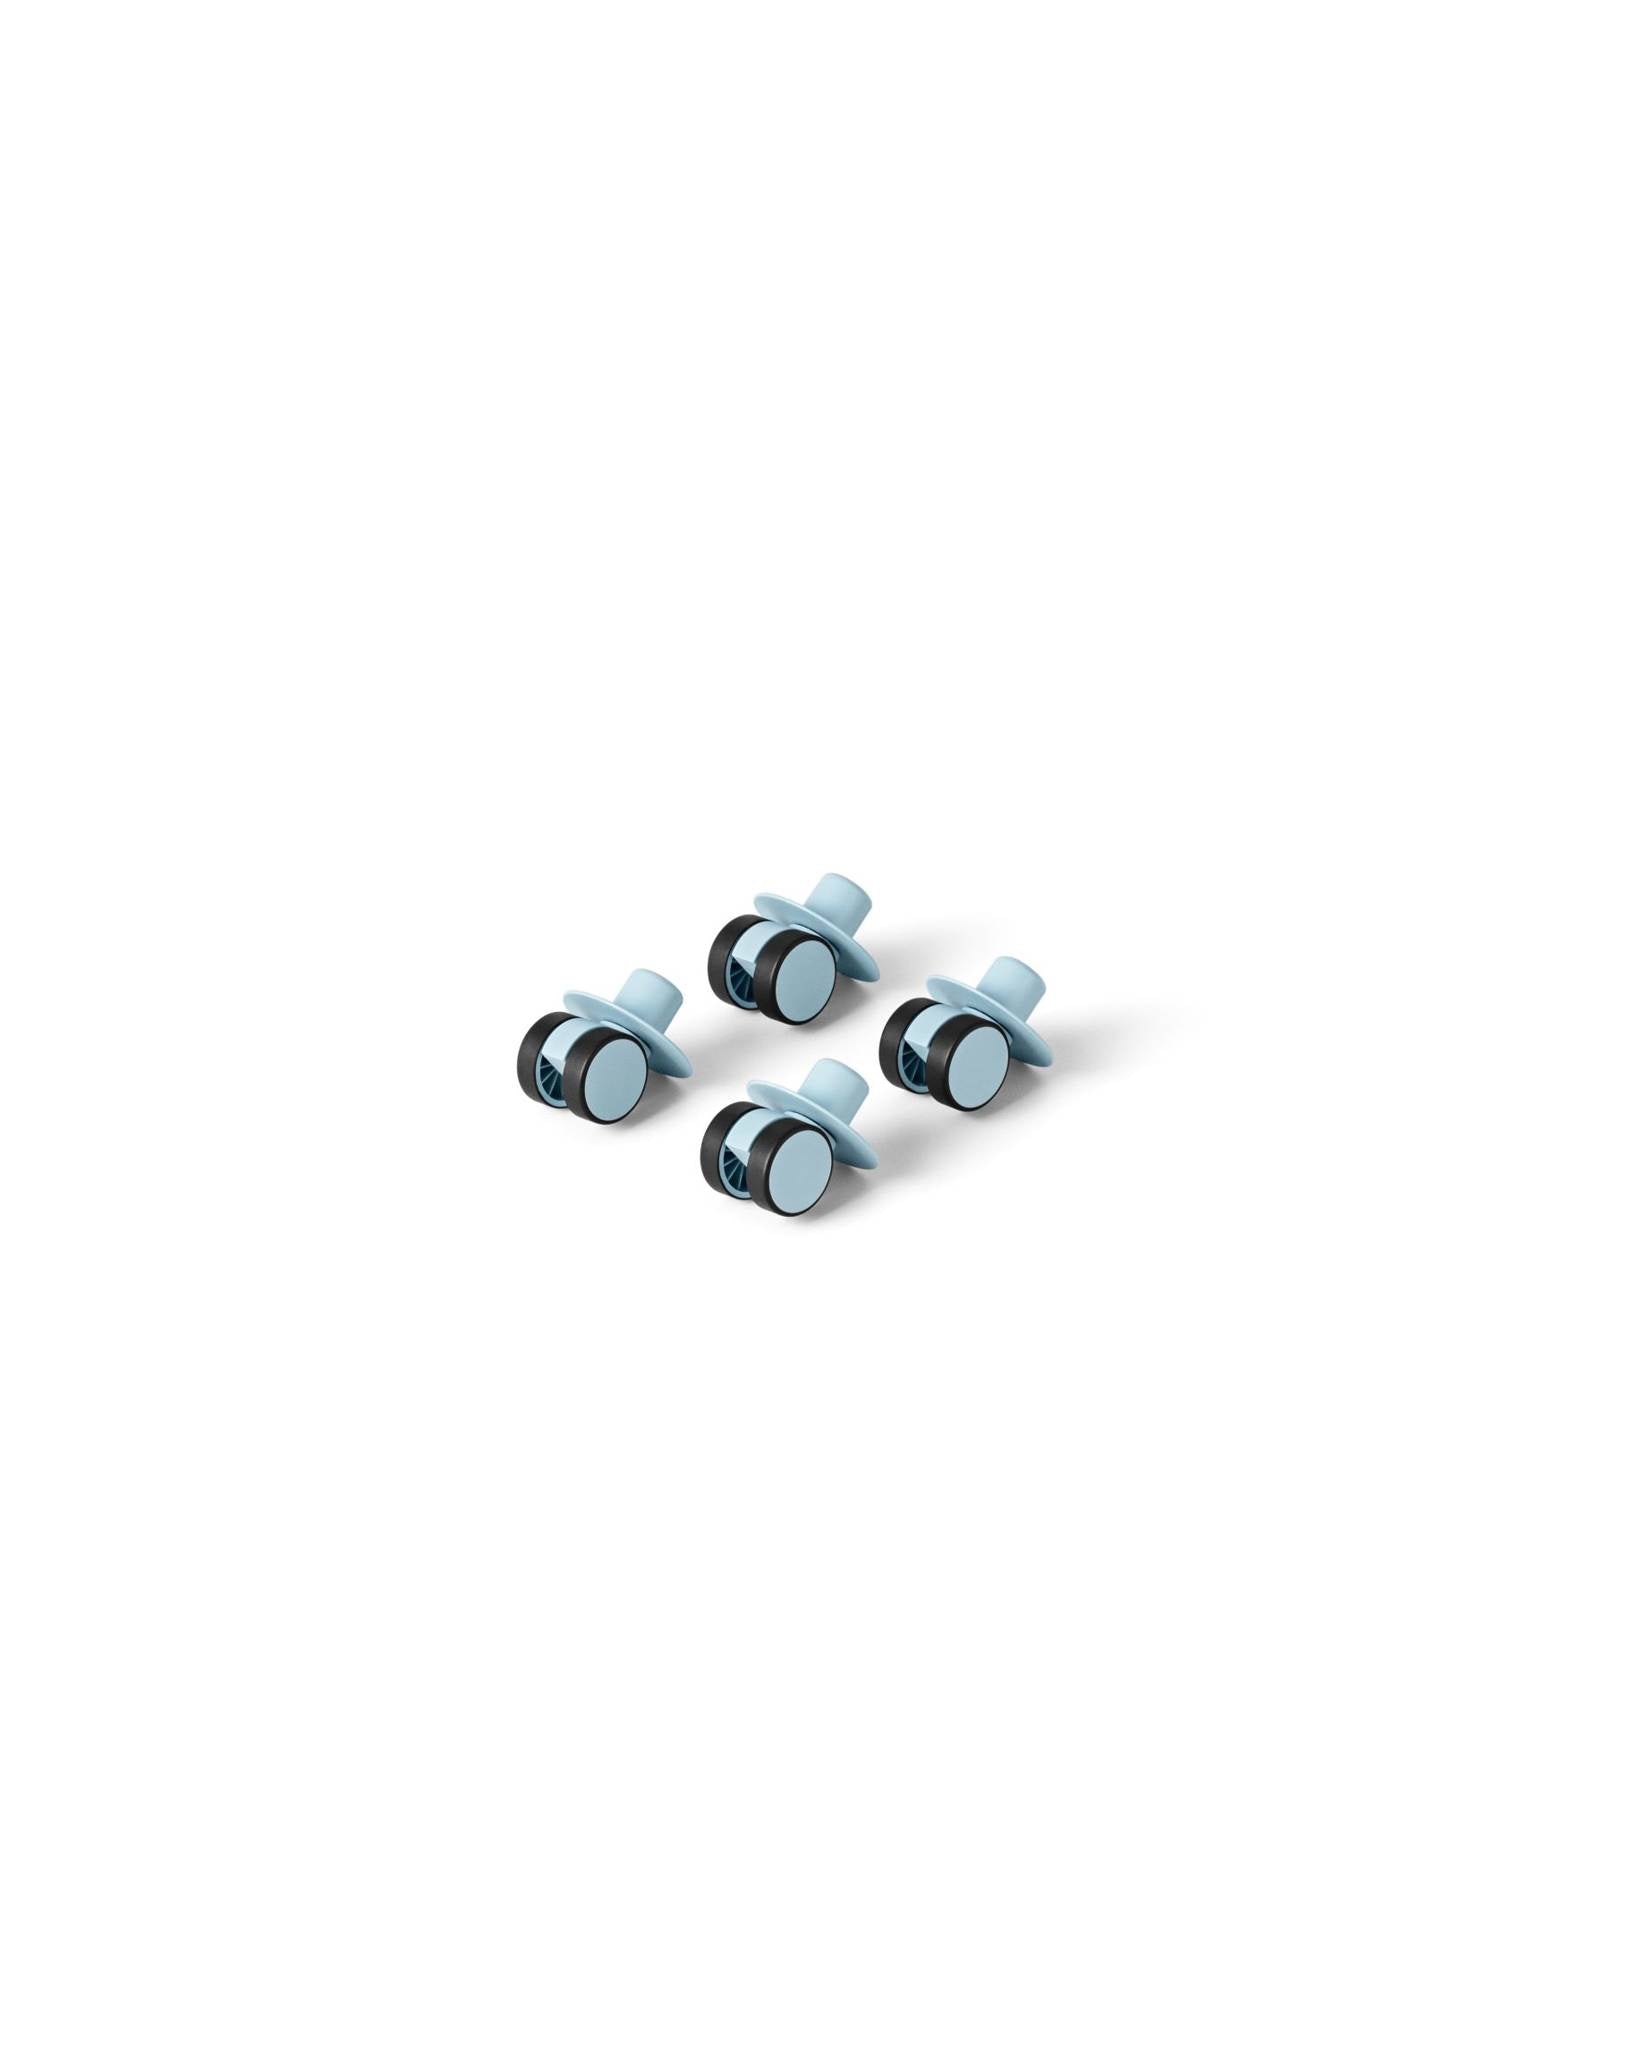 Module - four rotary wheels, blue/sky blue